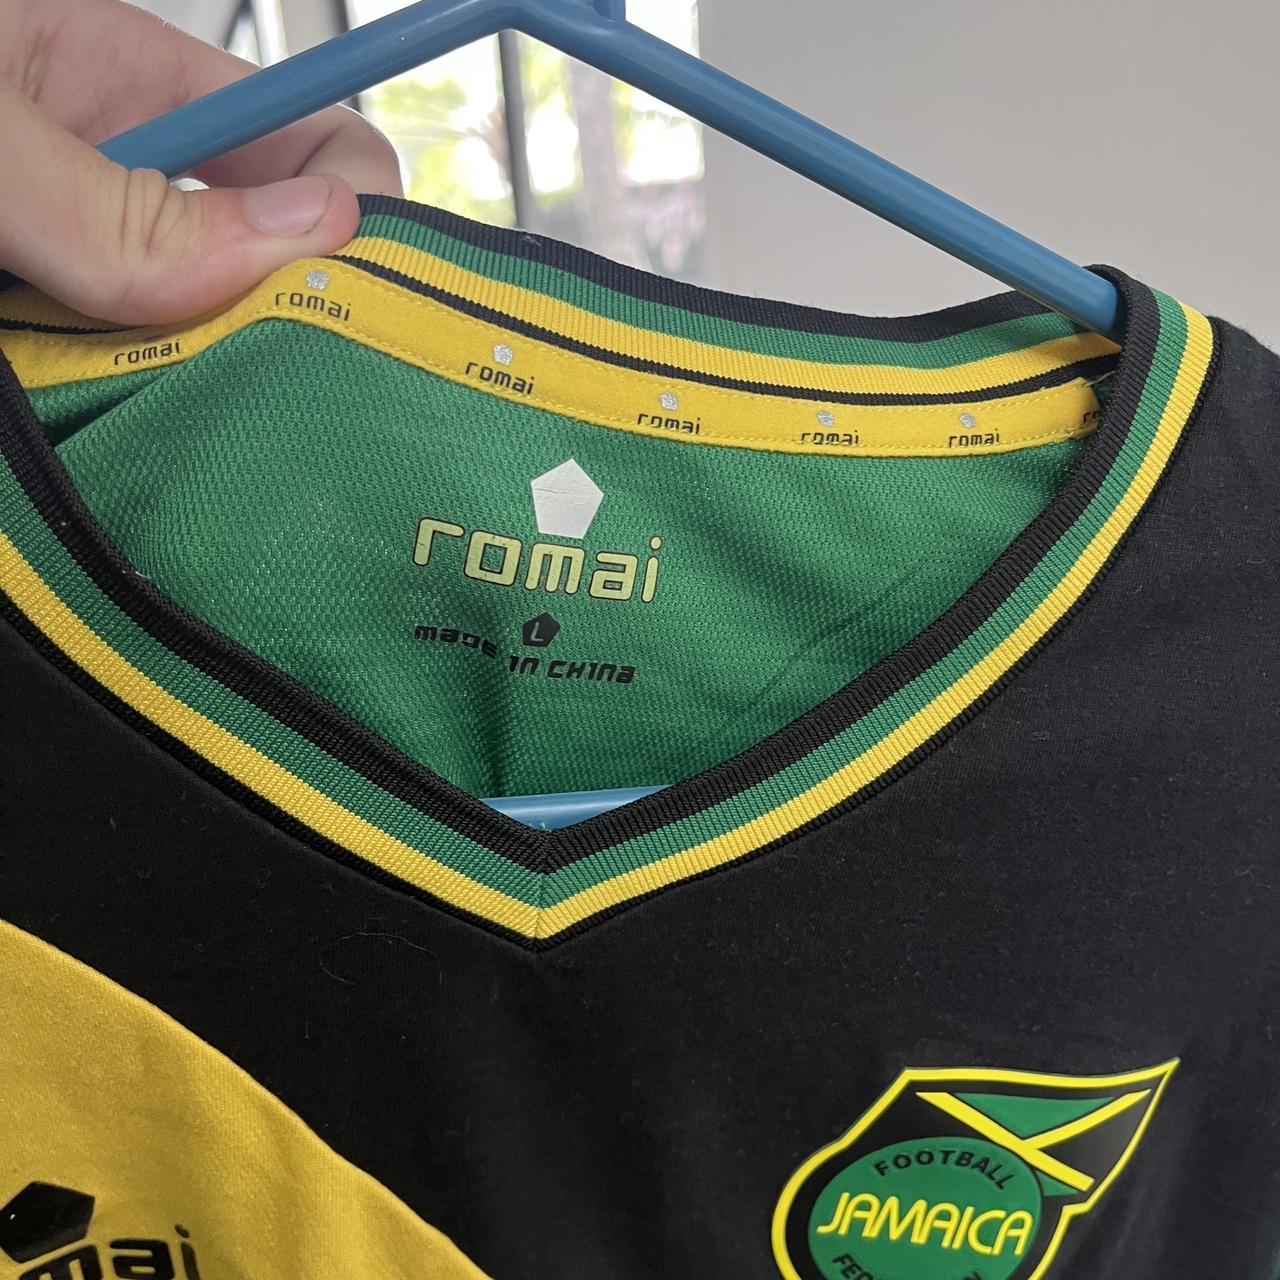 Vintage Jamaica soccer/football jersey - Depop